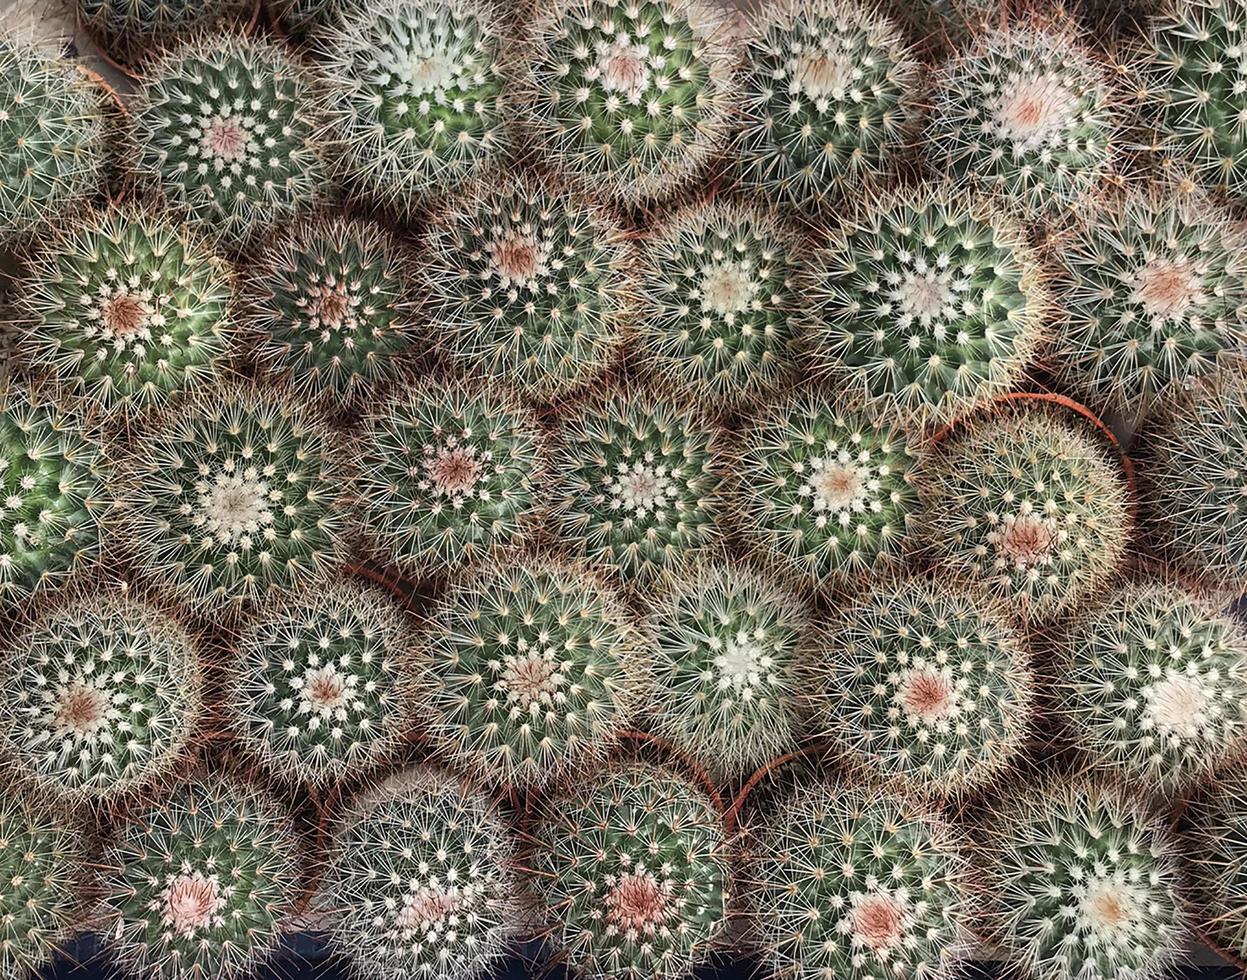 groupe de cactus photo